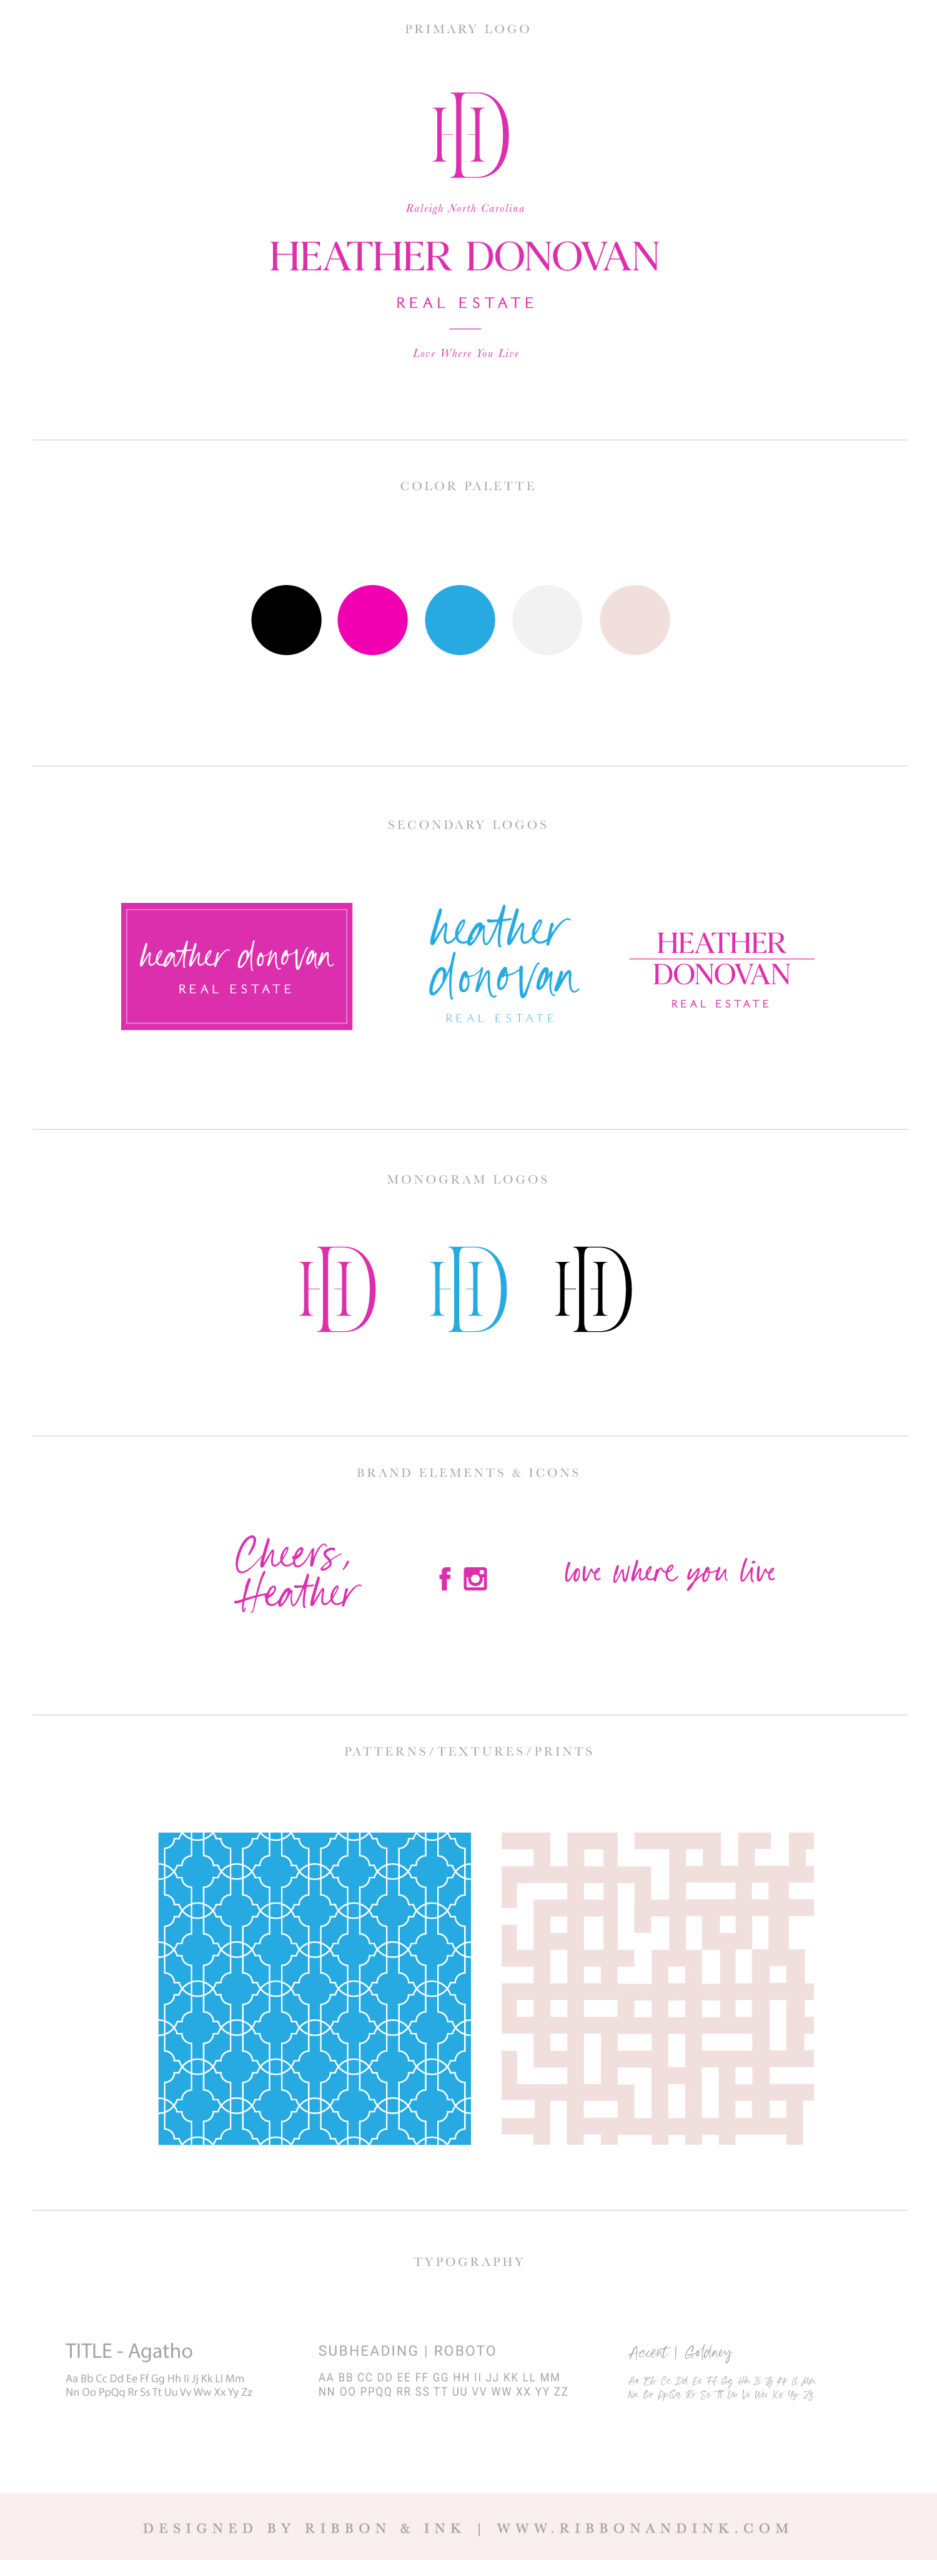 branding board / brand identity / logo for realtors / branding for women / branding for realtors / logo designer / modern / editorial